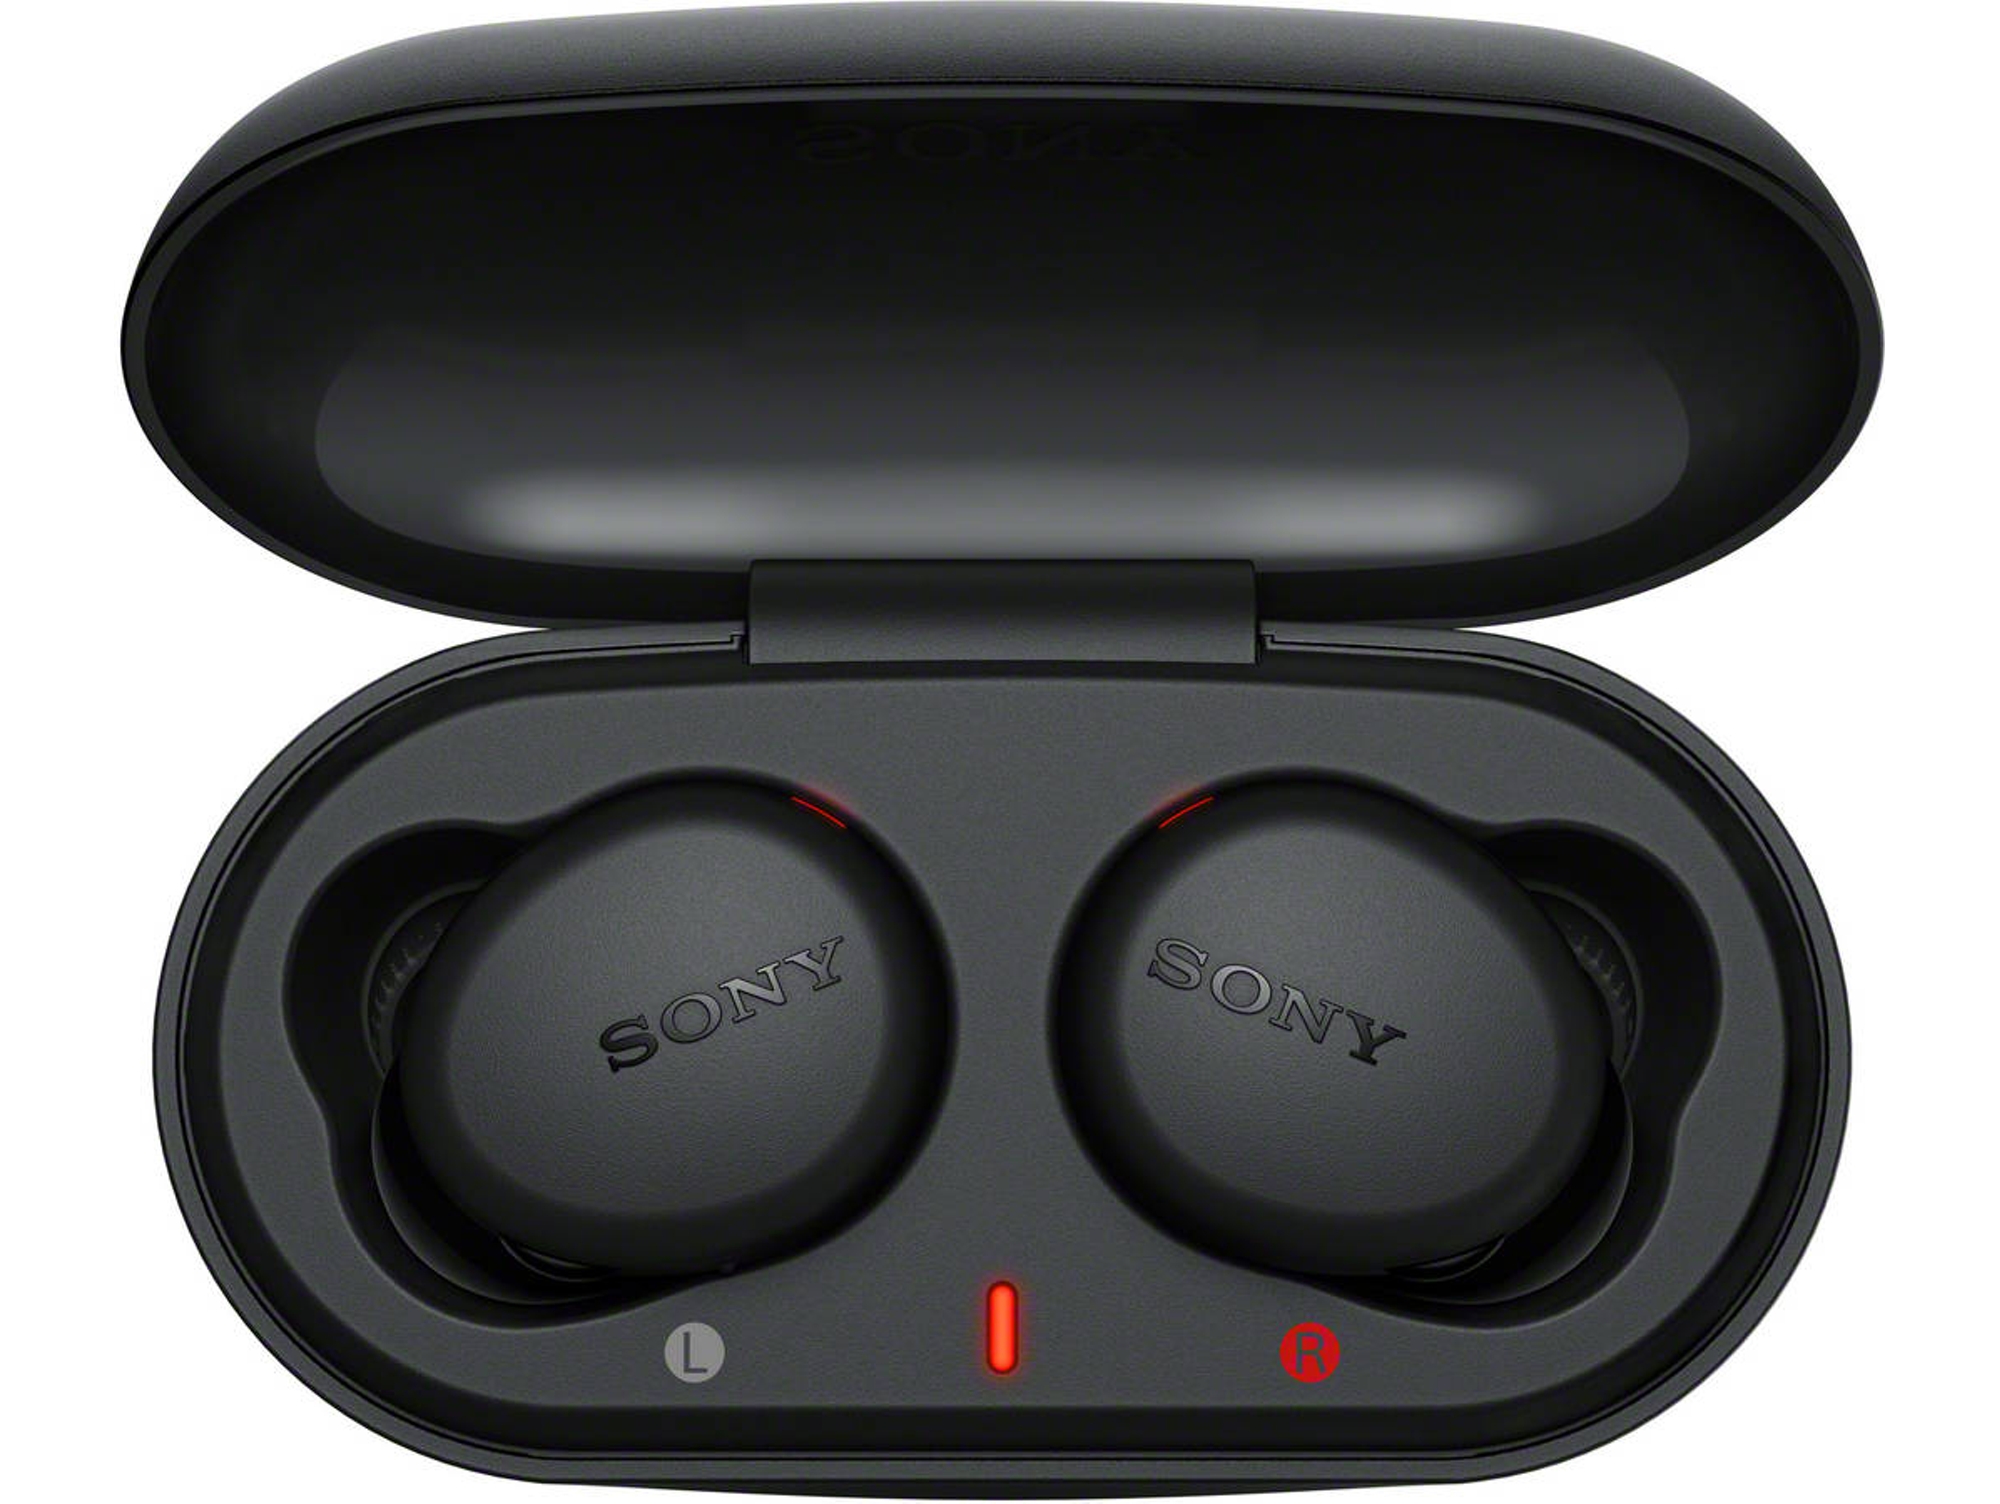 Auriculares Bluetooth Sony WF desde 72,25 € - Entrega asegurada, pa